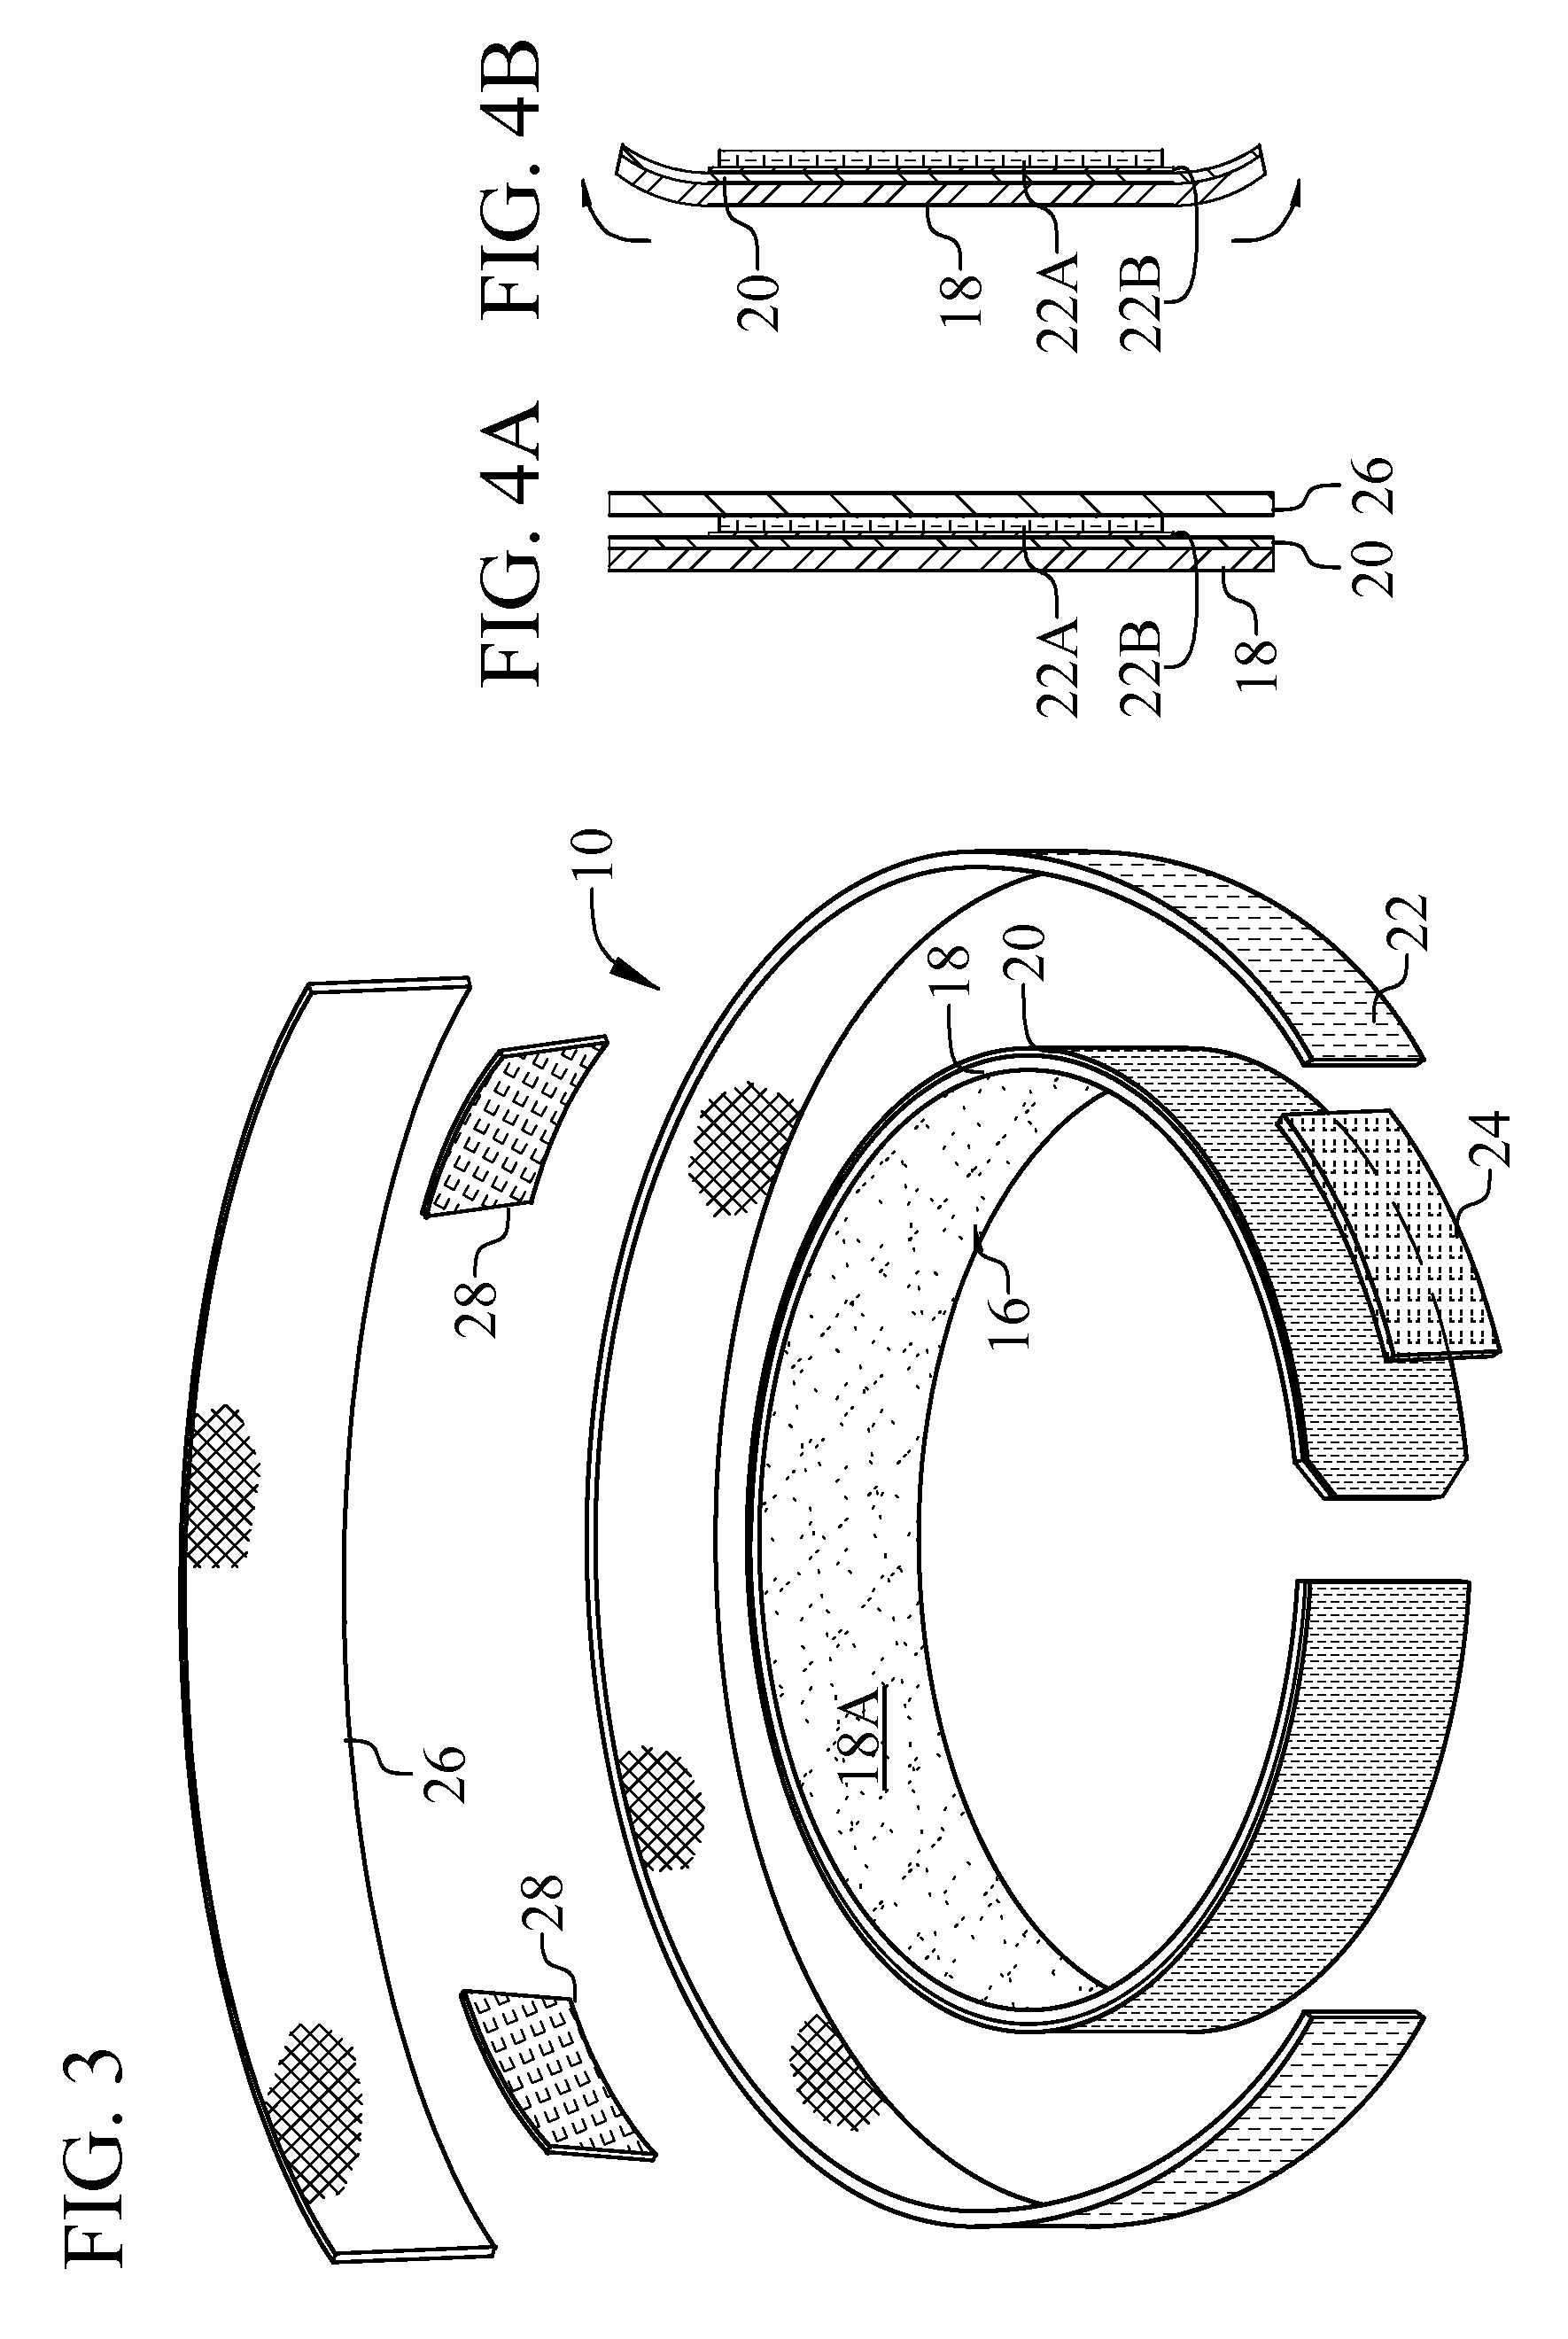 Sacroiliac belt and composite structure